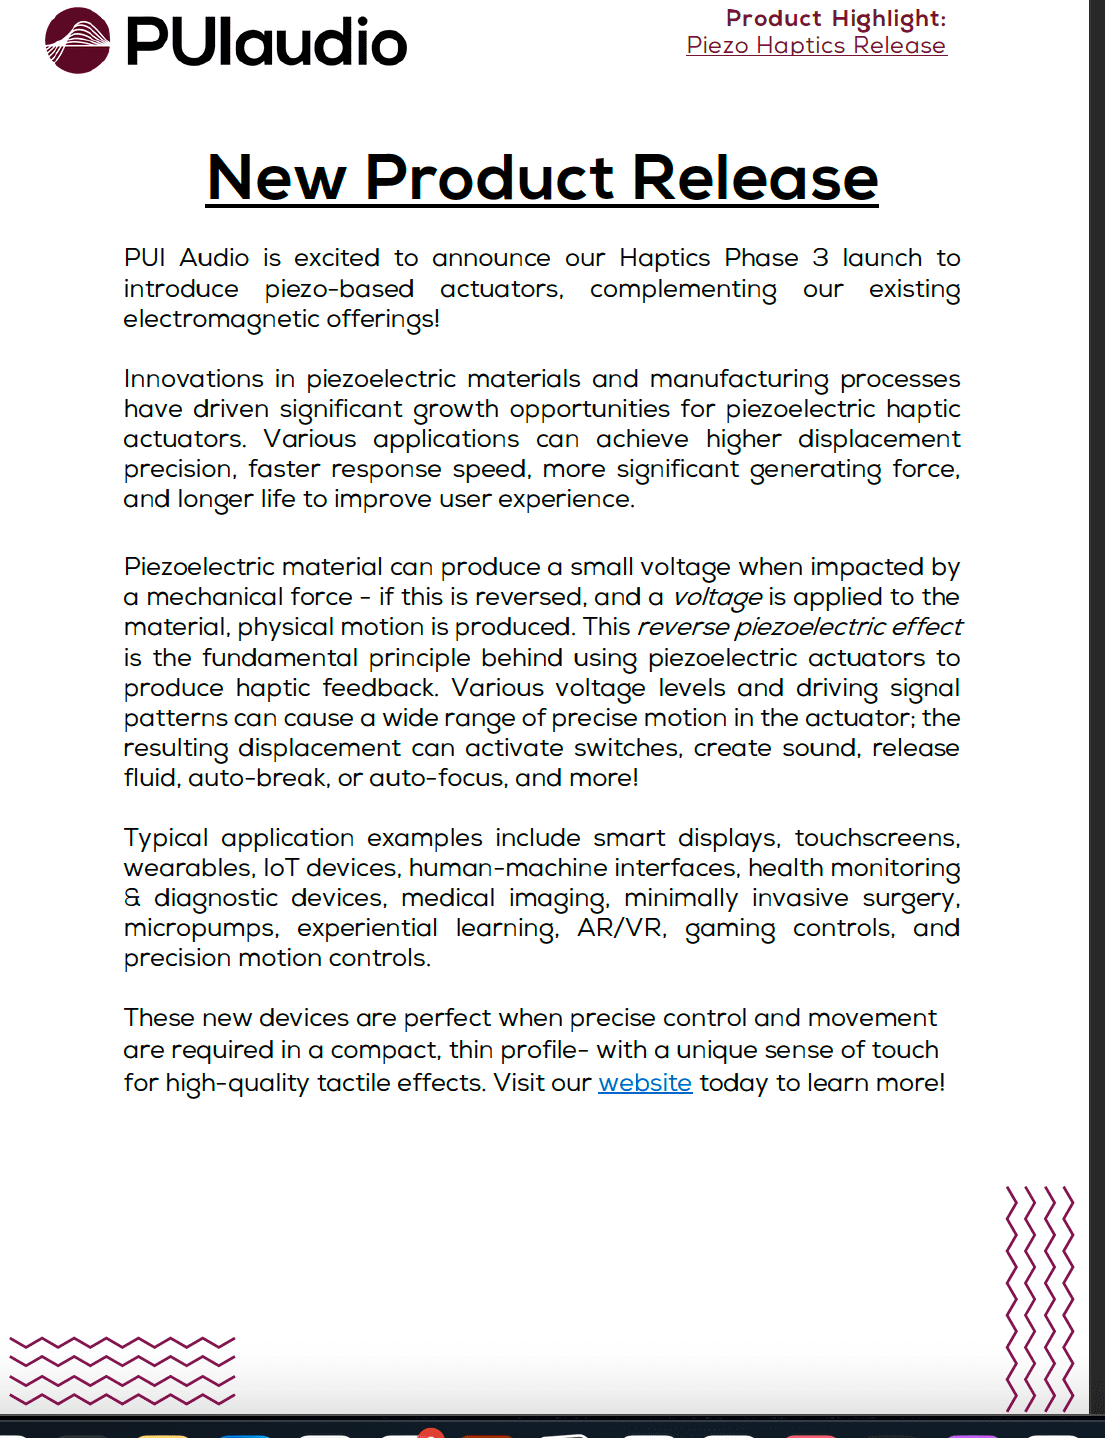 Product Highlight: Piezo Haptics Release